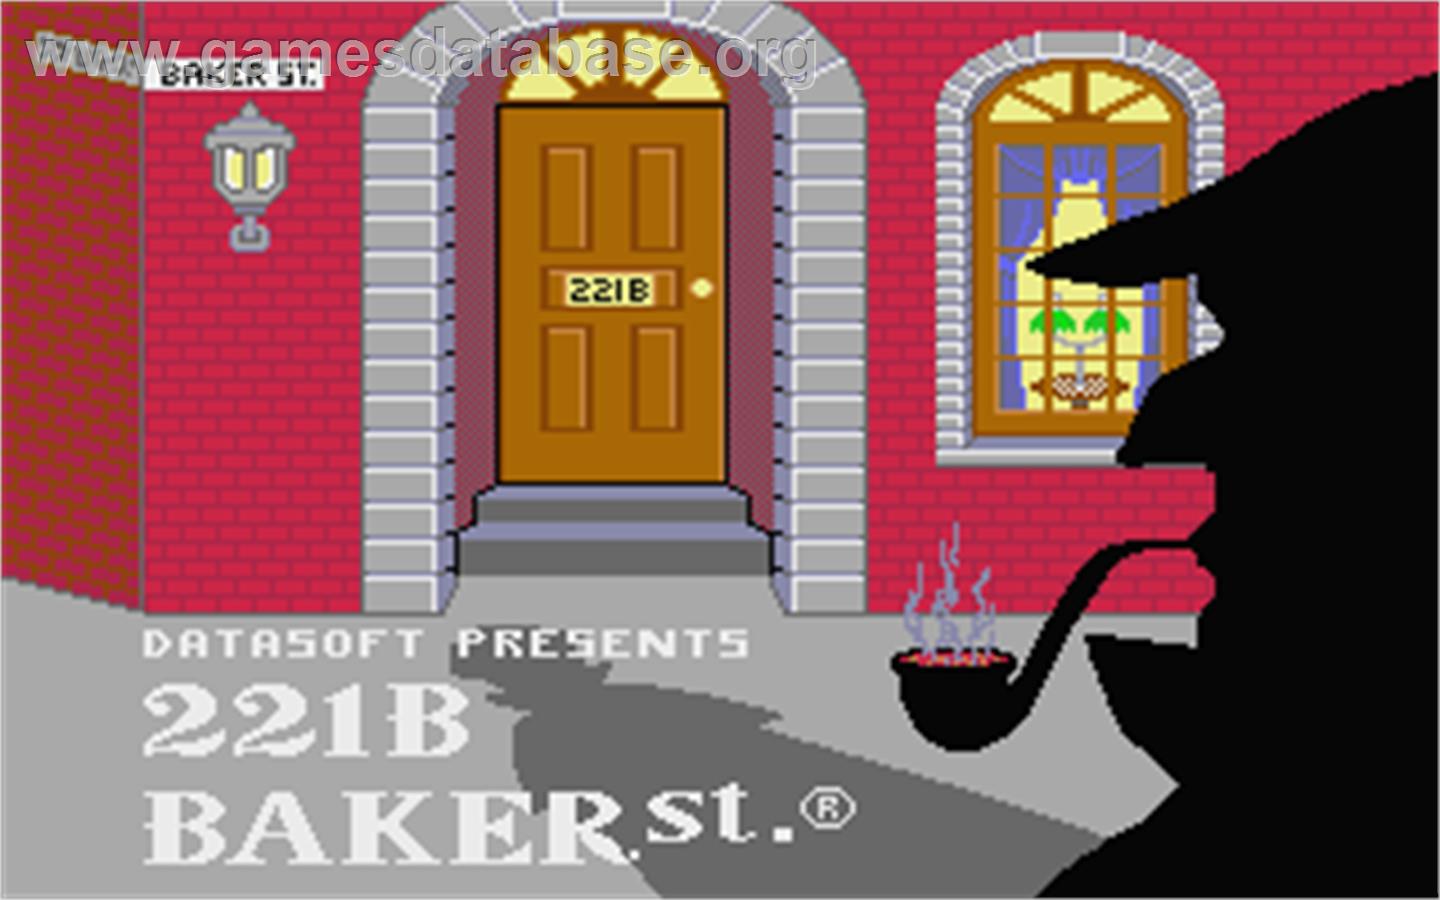 221 B Baker St. - Atari ST - Artwork - Title Screen